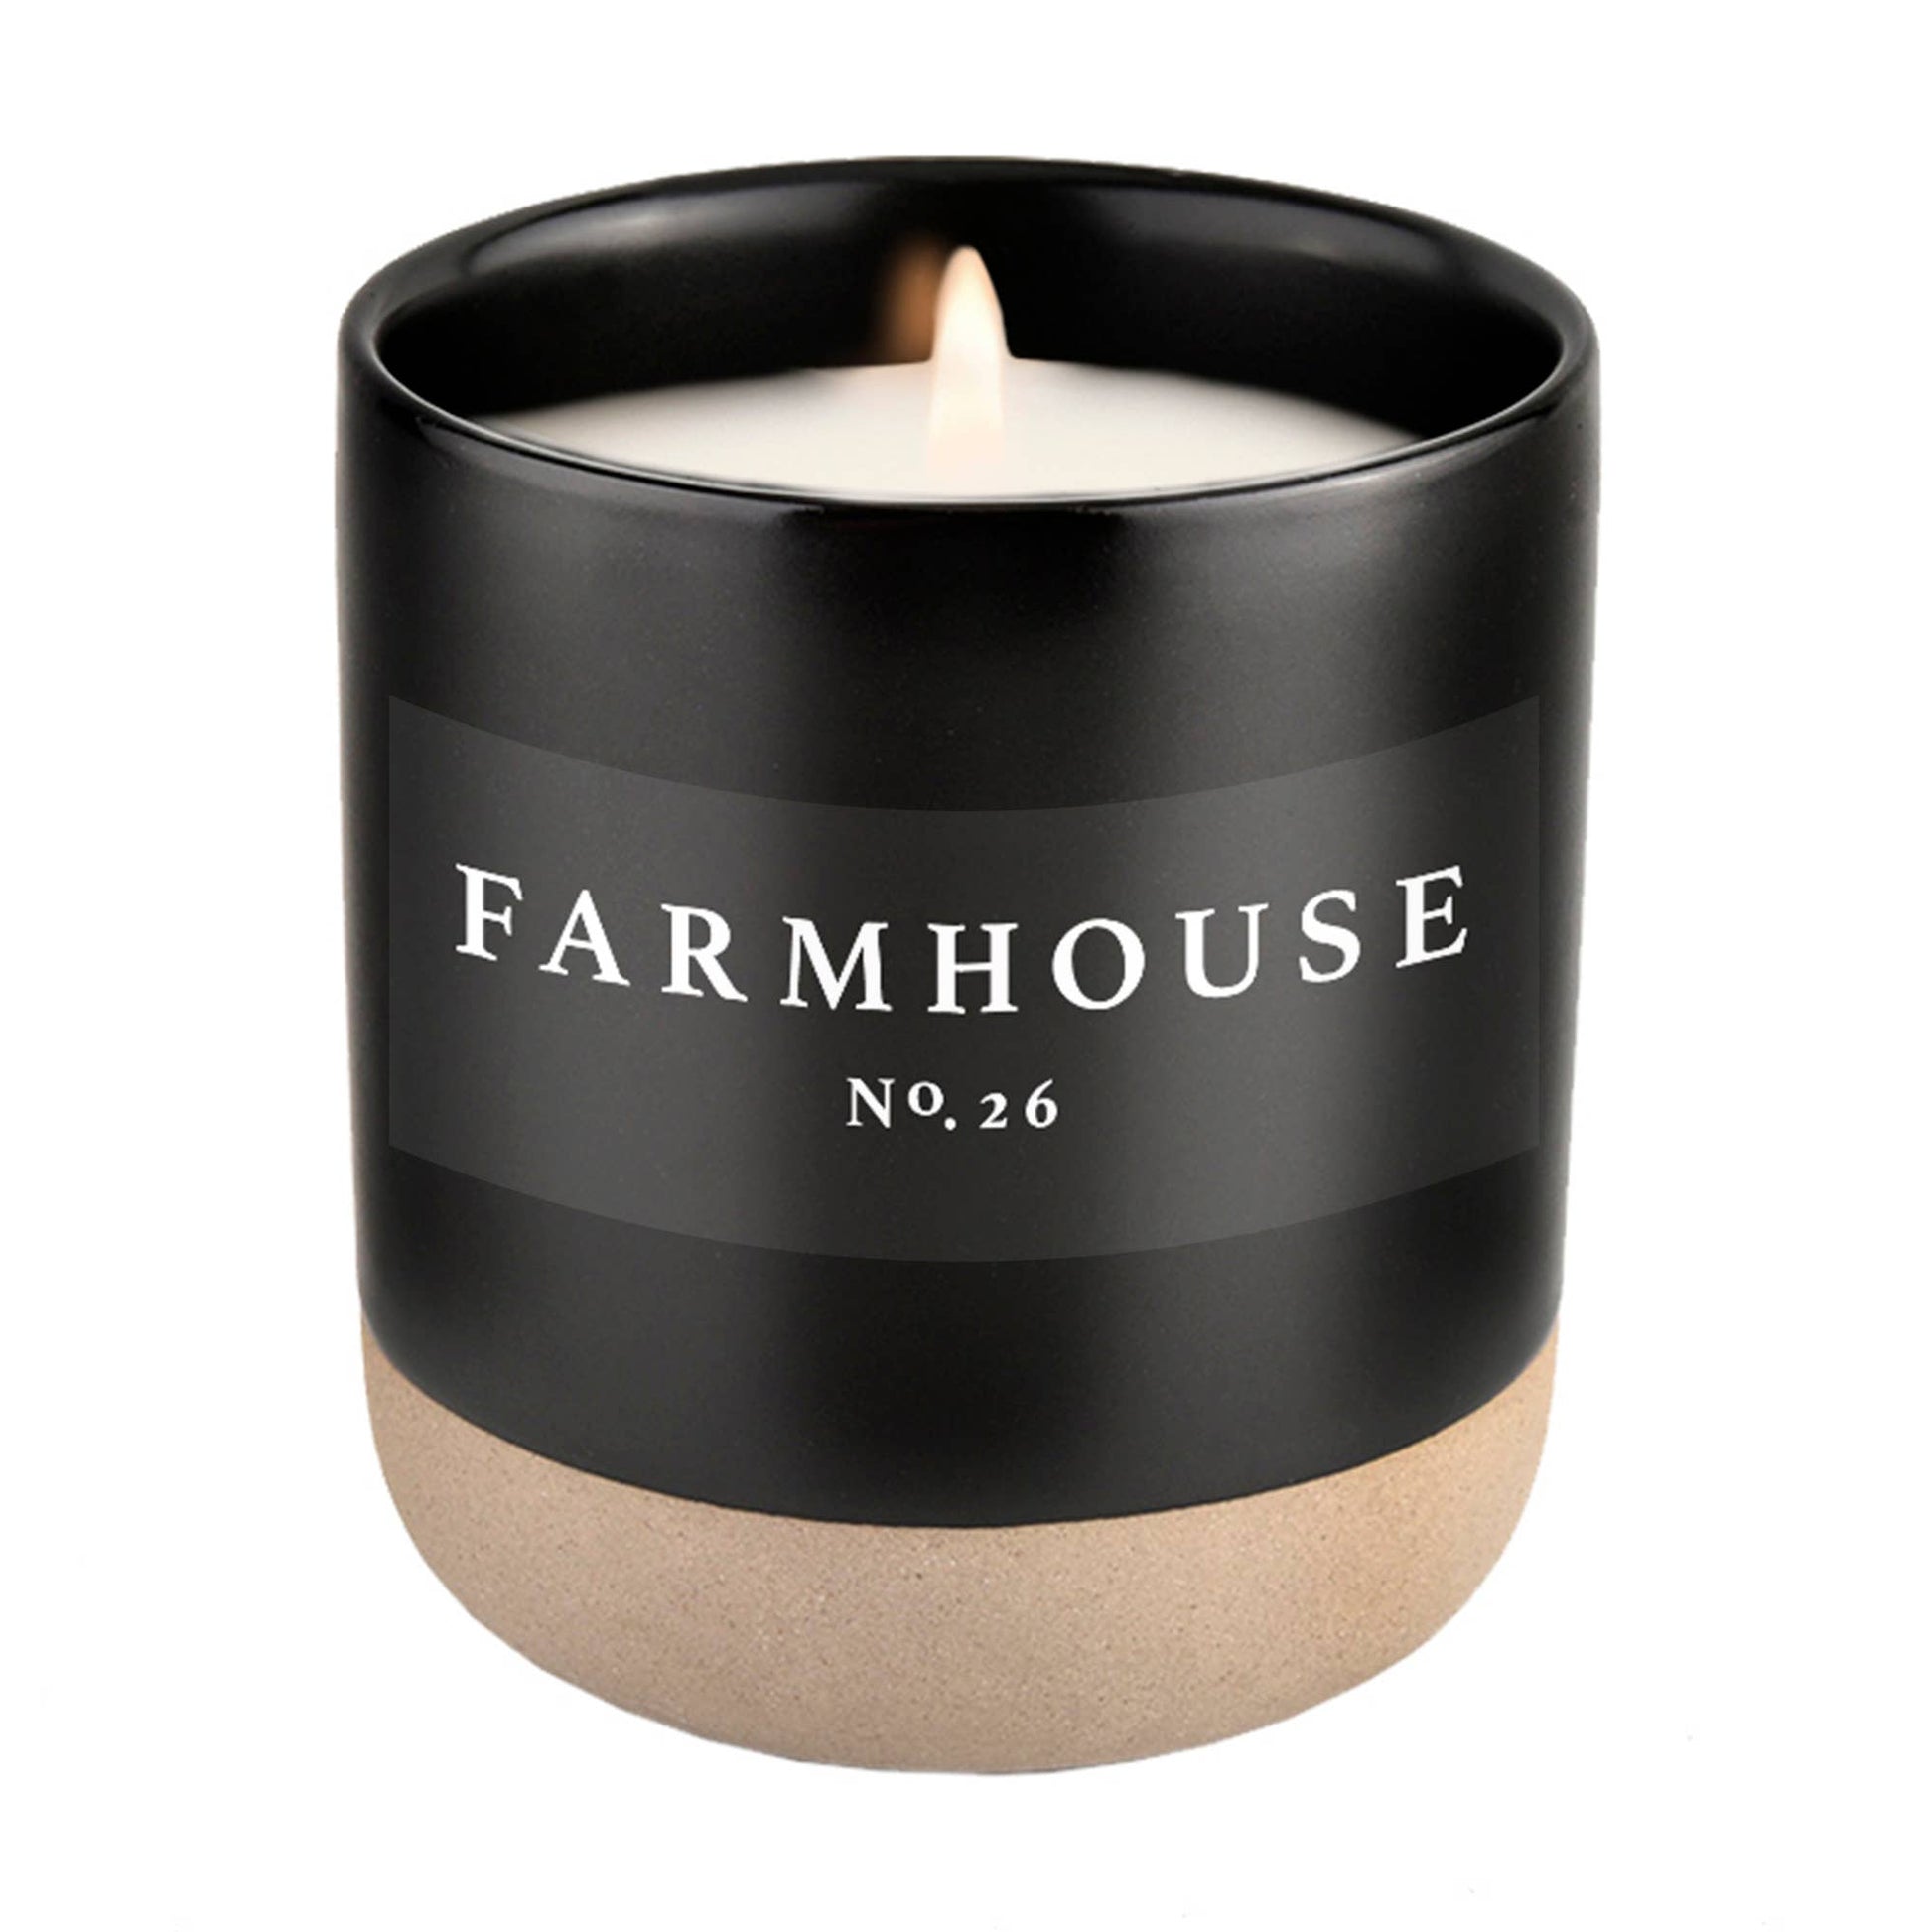 farmhouse soy candle - black stoneware jar - 12 oz